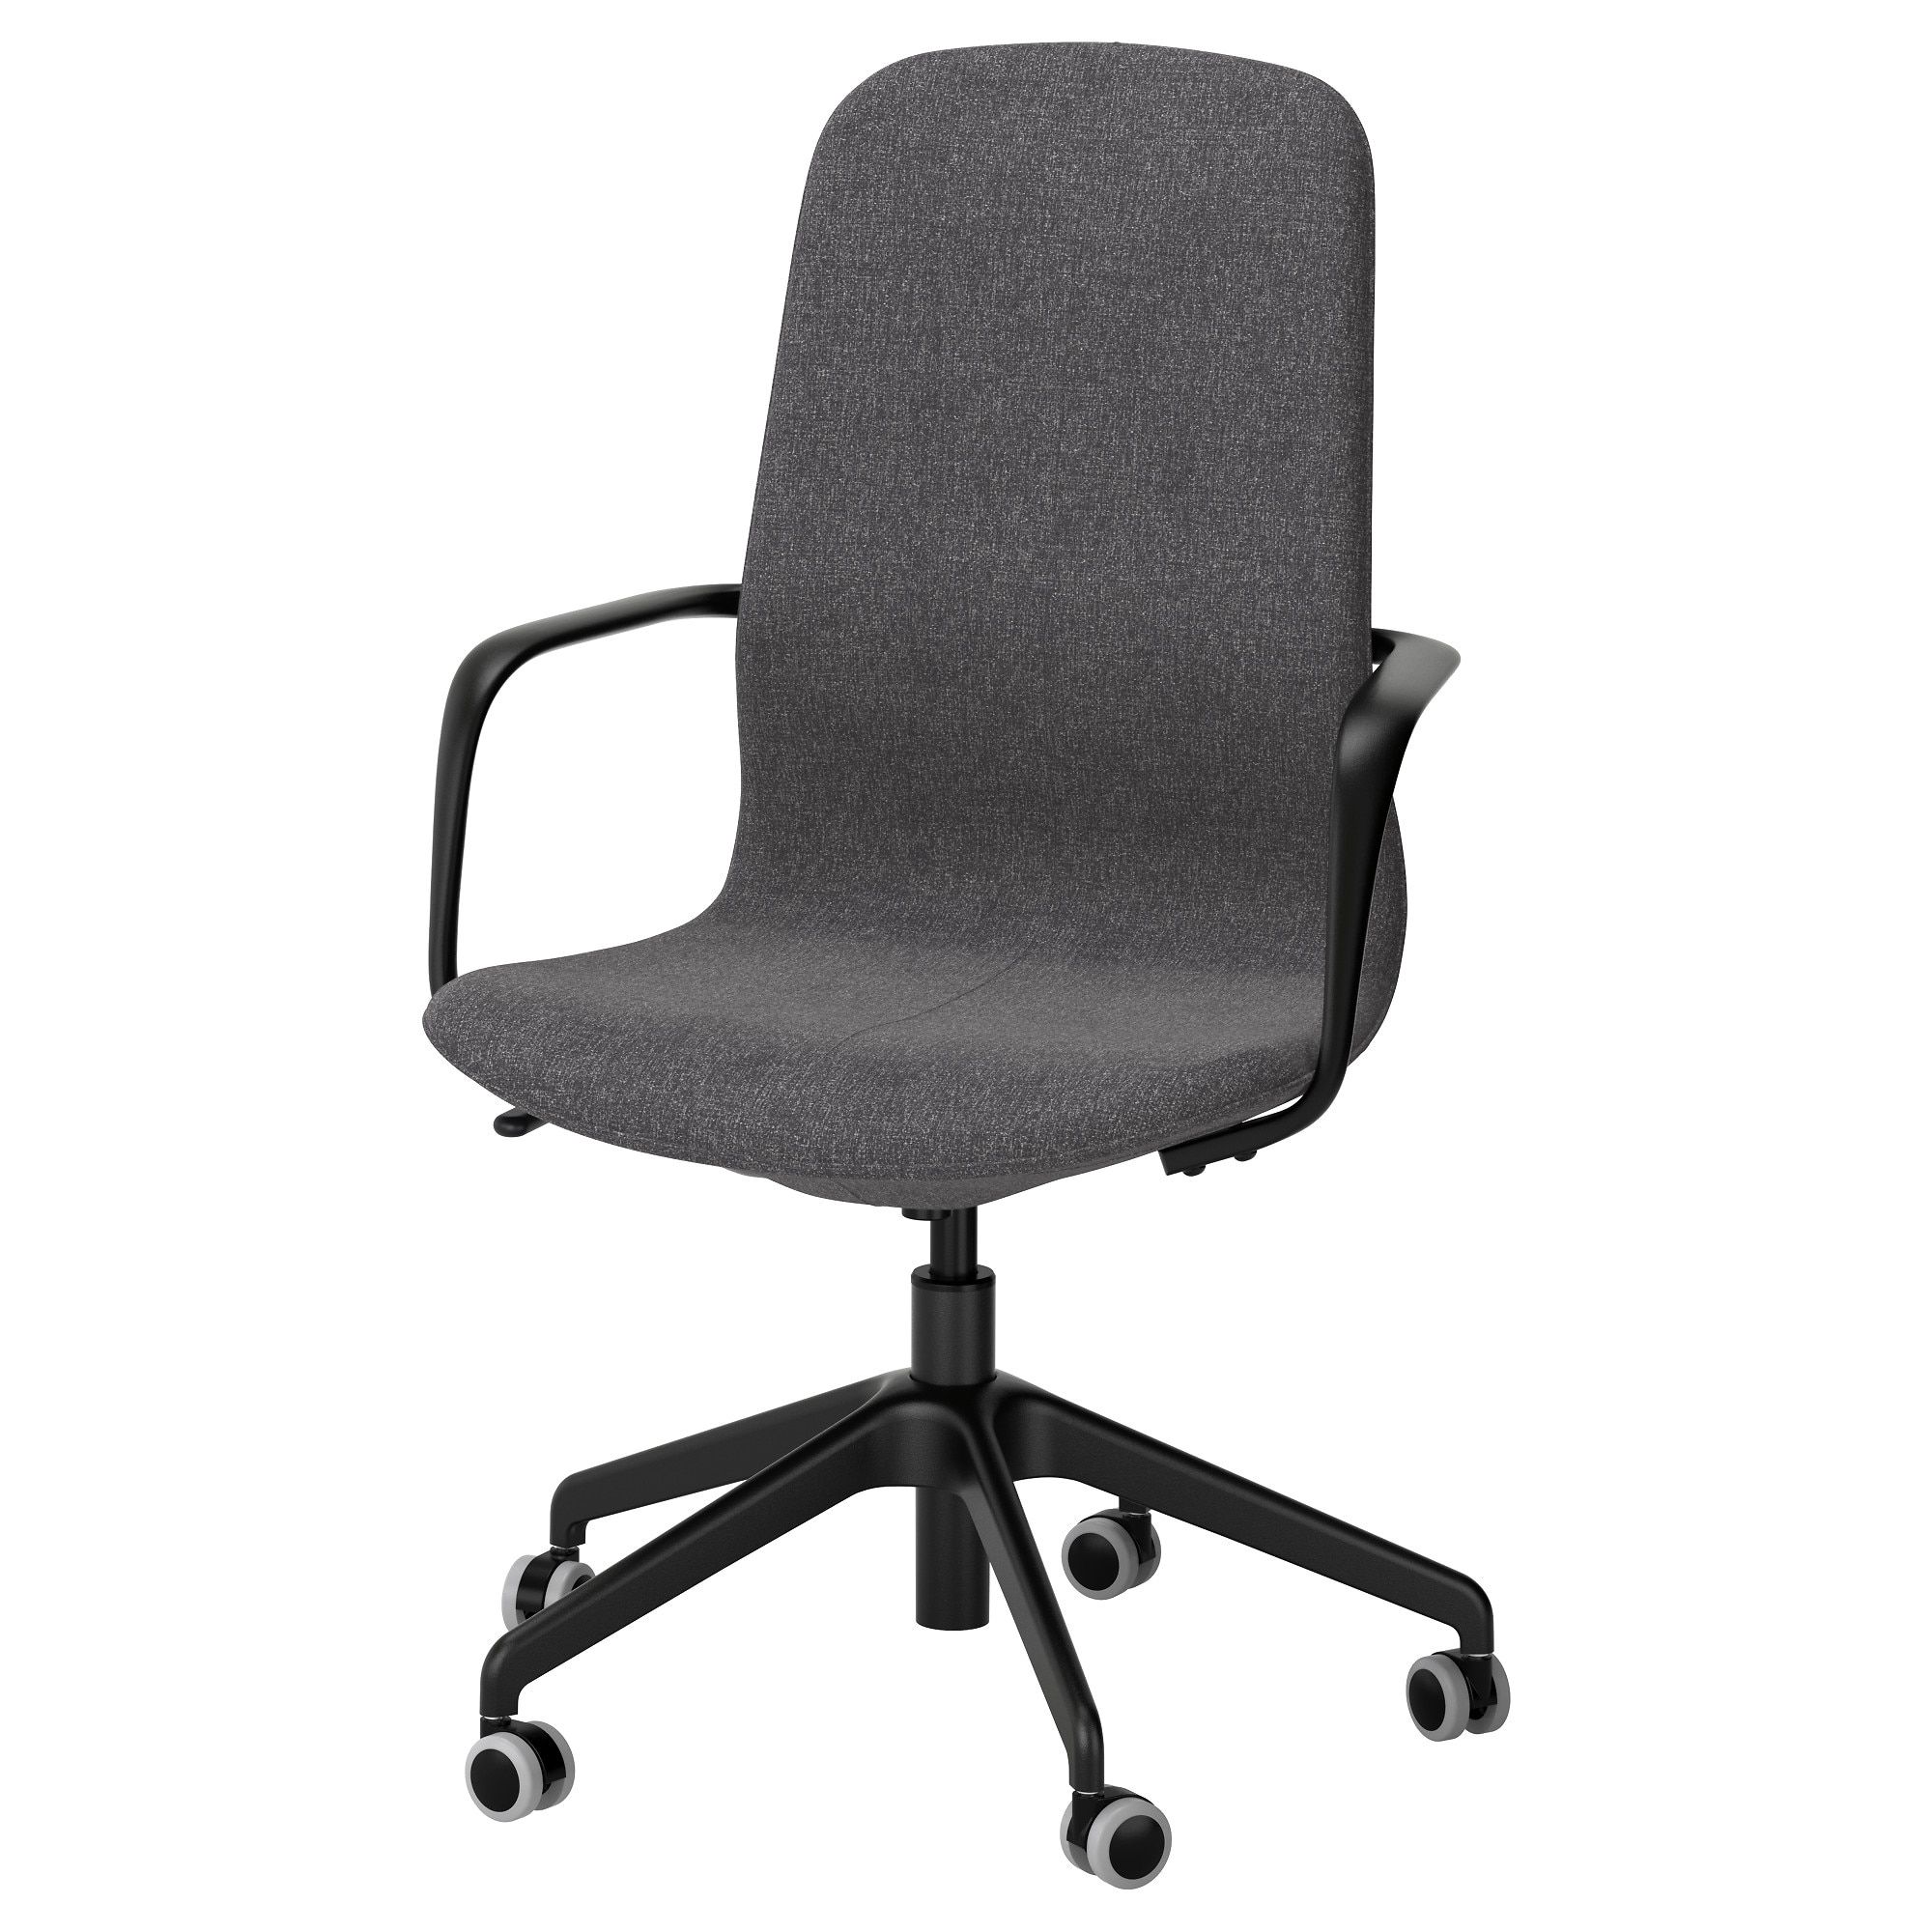 Långfjäll Swivel Chair Gunnared Dark Grey/black – Ikea In Dark Grey Swivel Chairs (View 5 of 25)